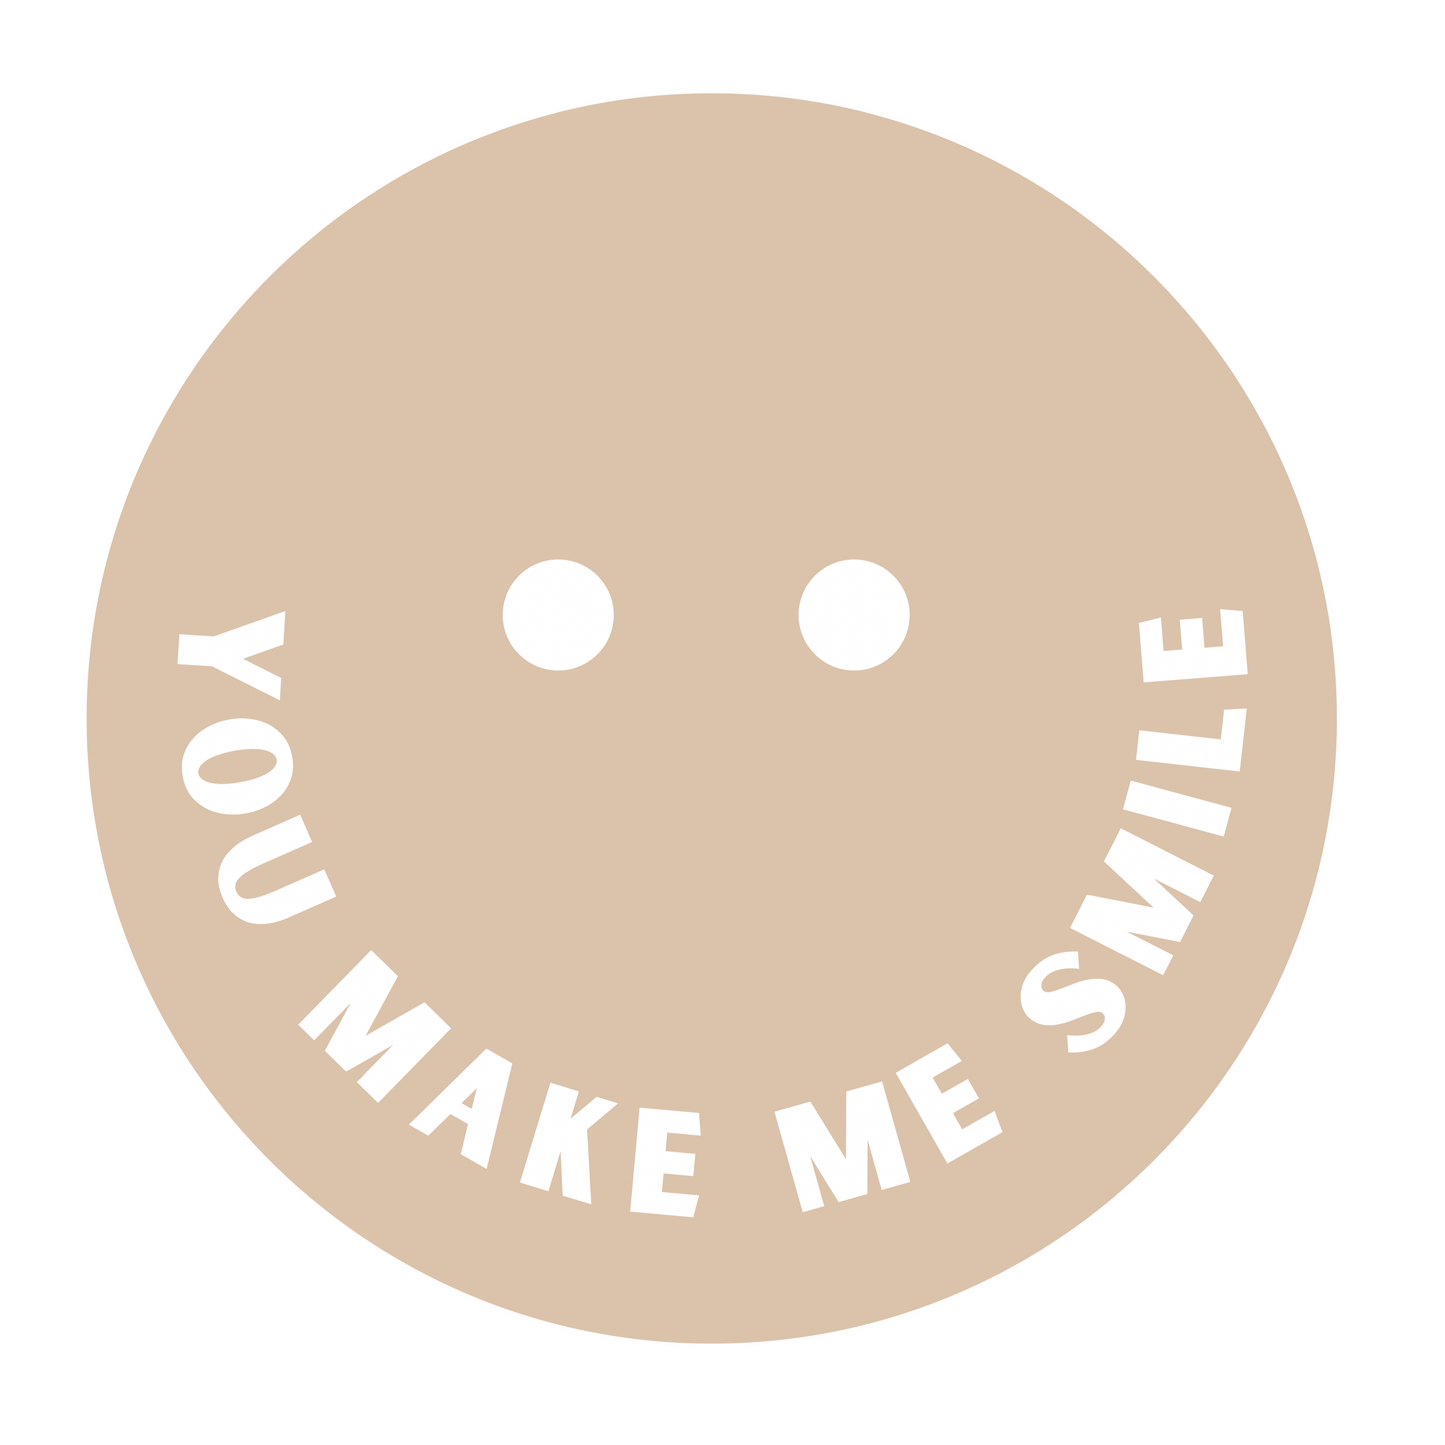 Make Me Smile Sticker